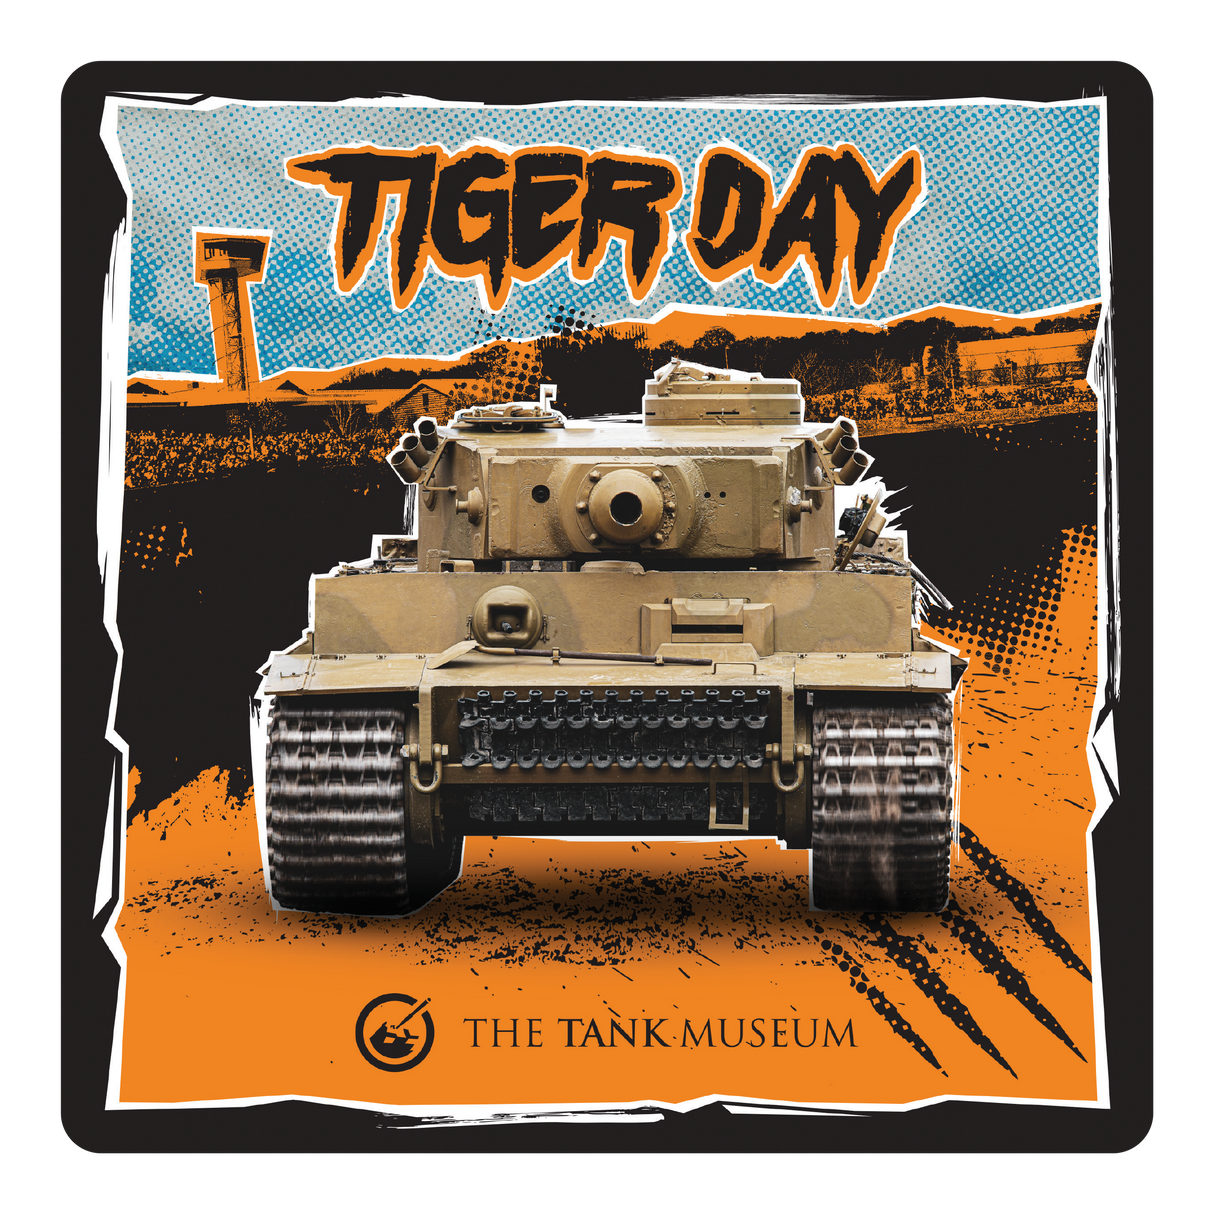 Tiger Day Coaster